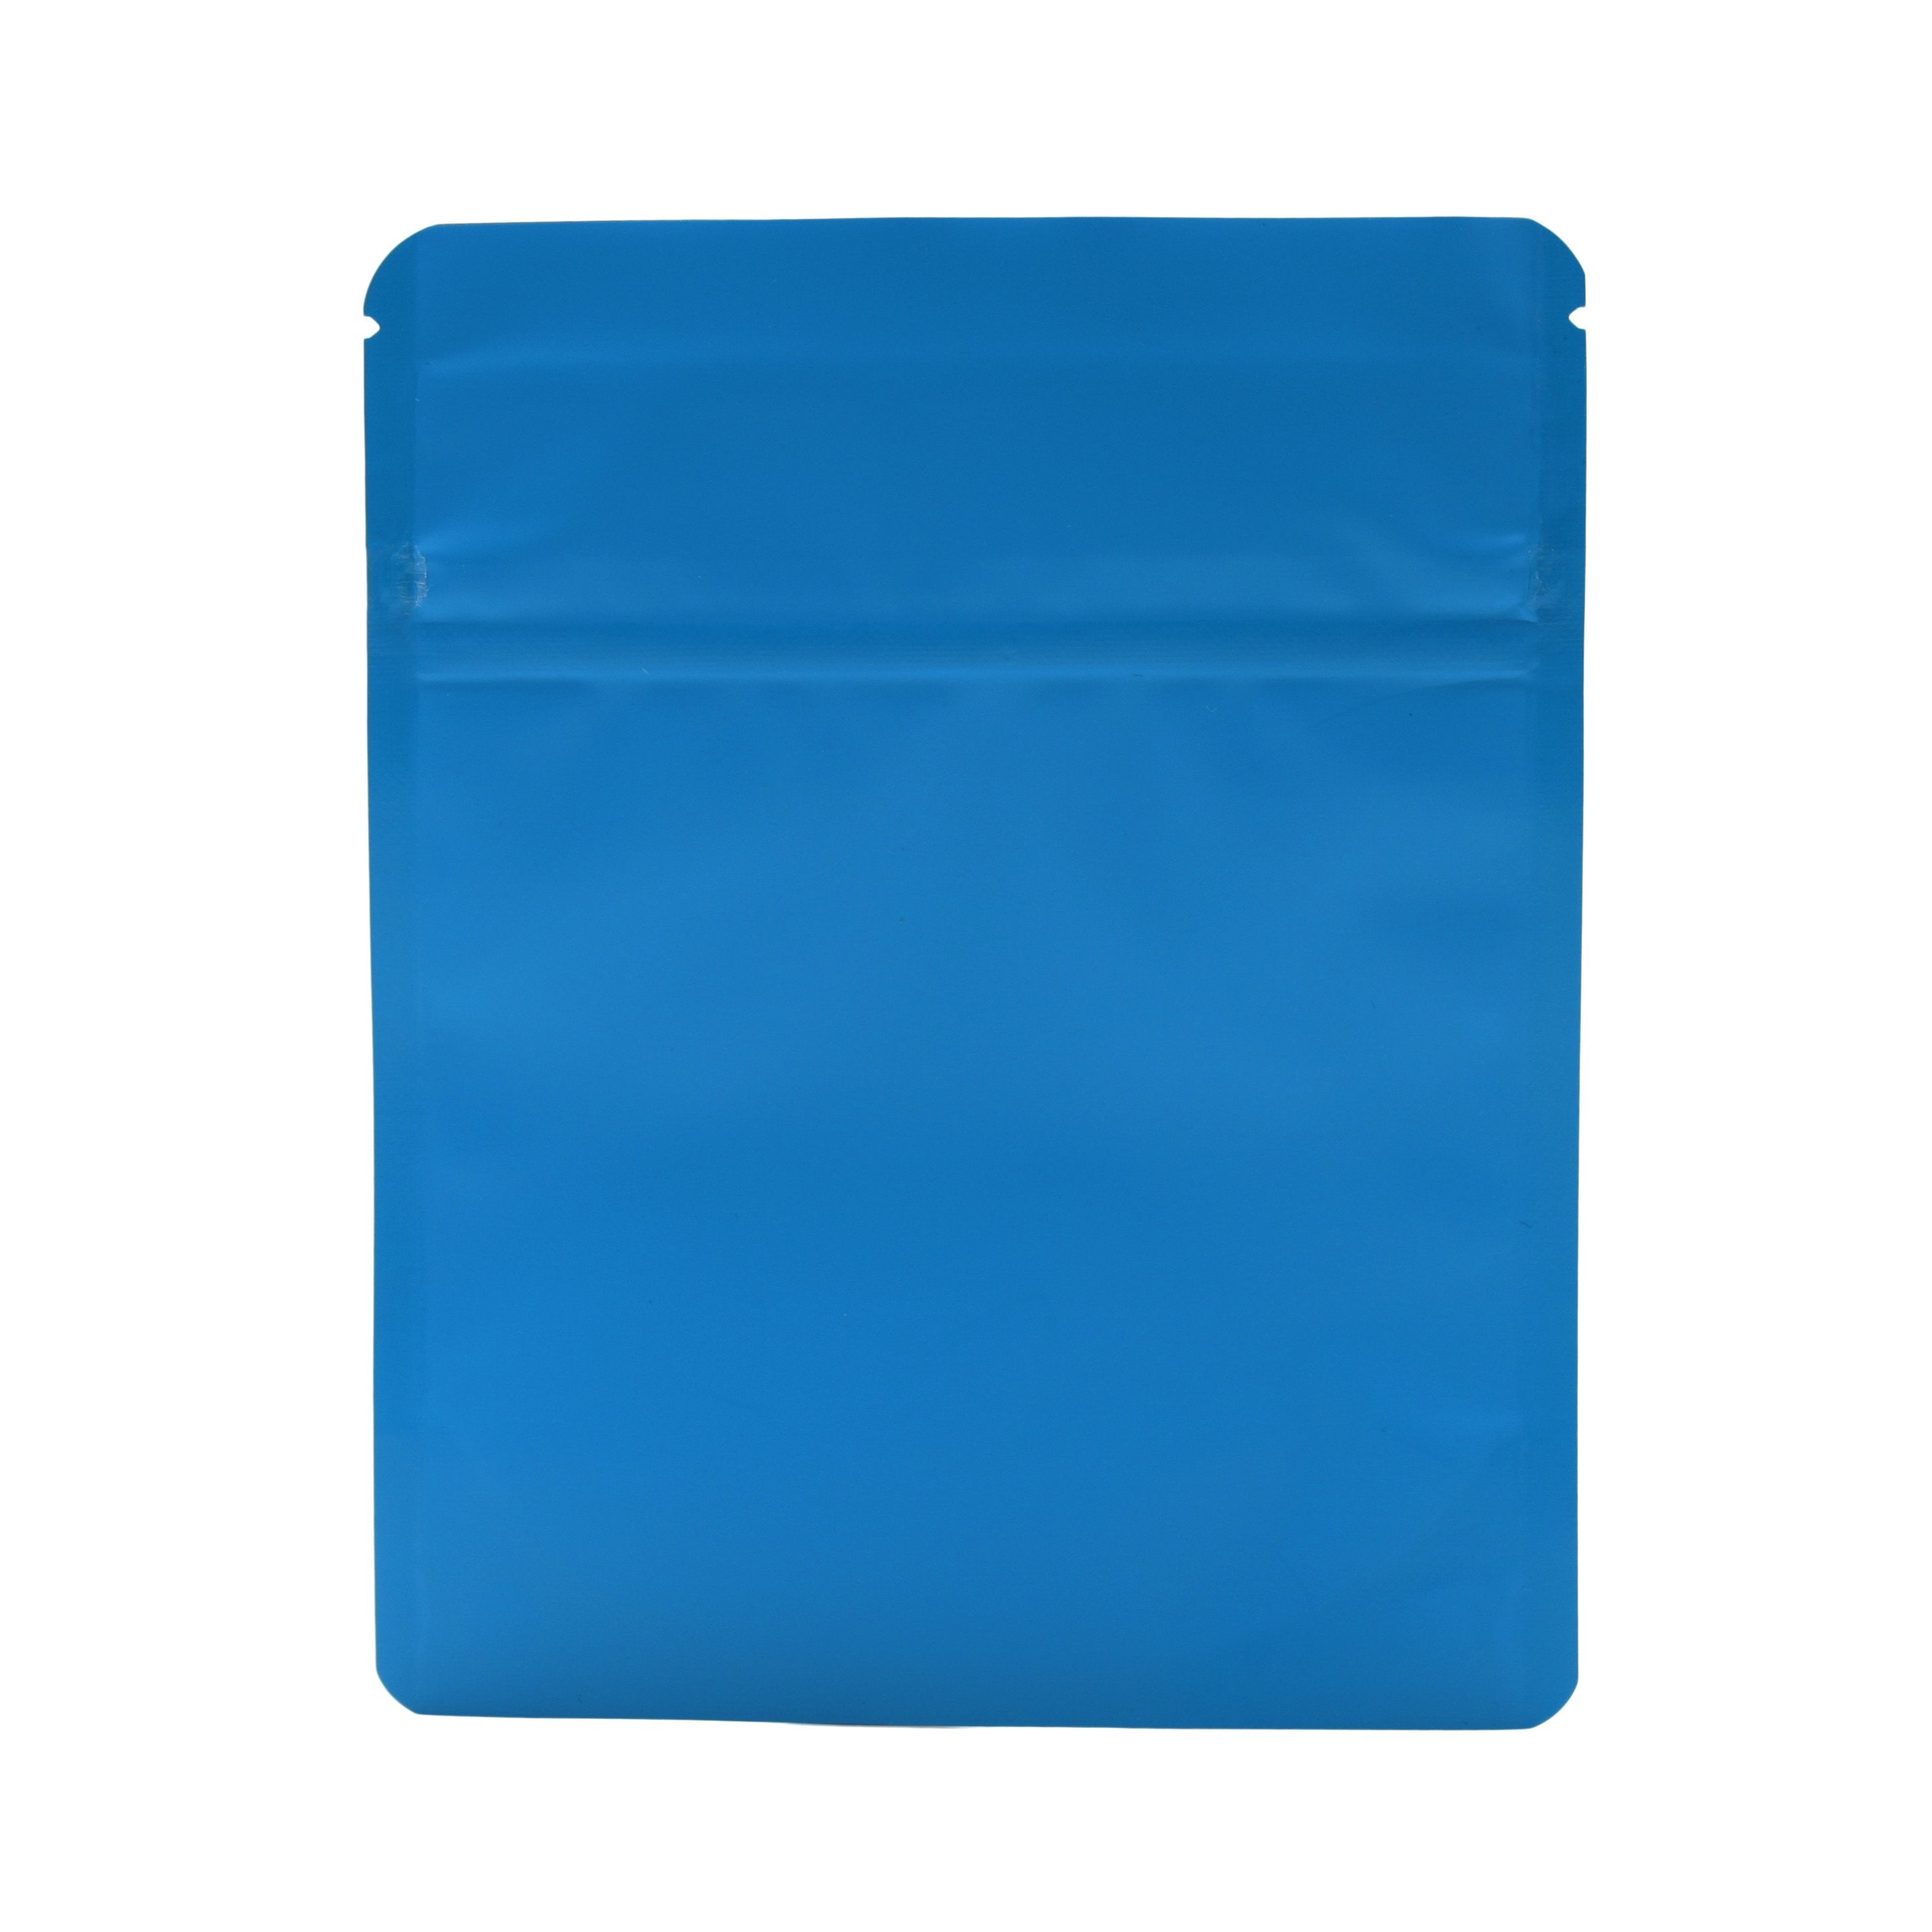 Bag King Child-Resistant Opaque Wide Mouth Bag (1/4th oz) 4.7" x 5.9" Matte Blue